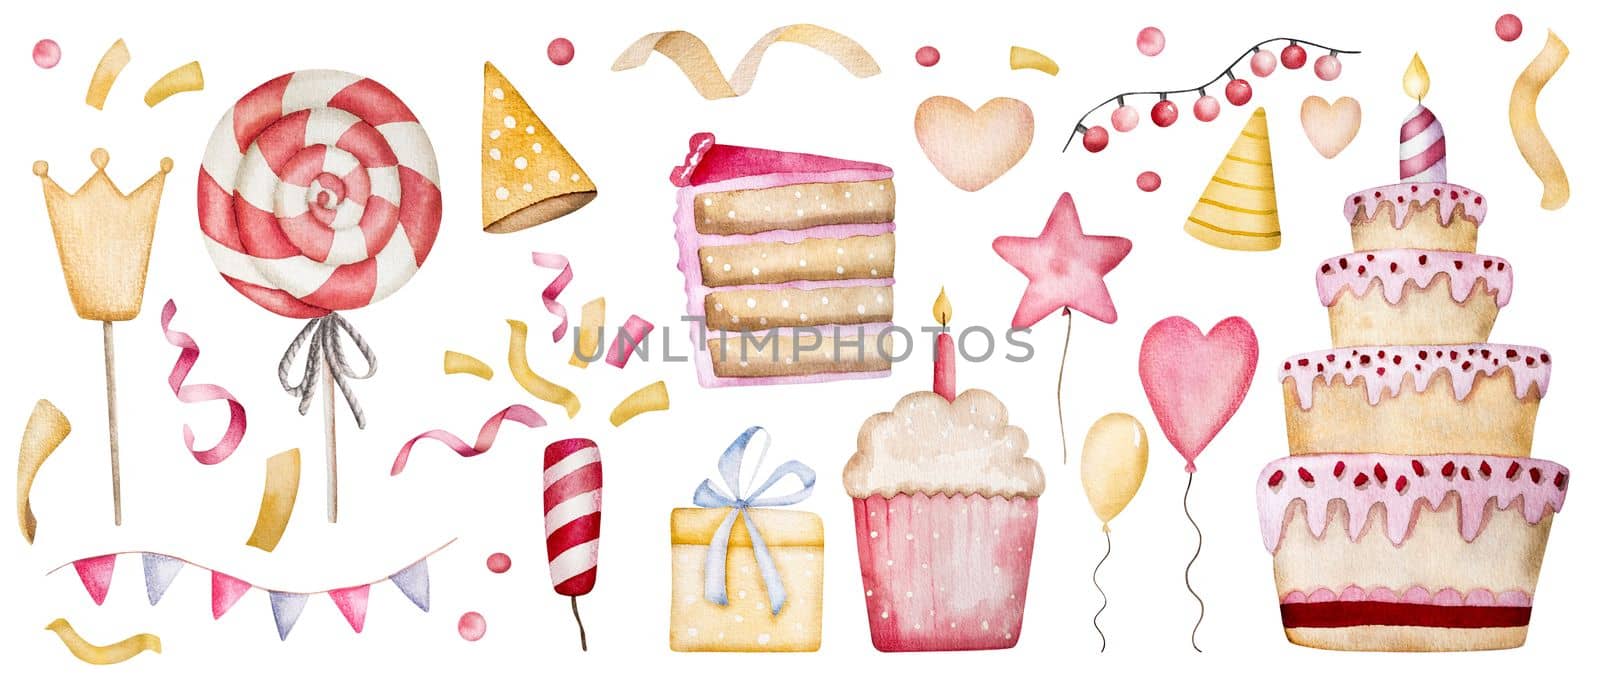 Happy Birthday cupcake watercolor illustration by tan4ikk1